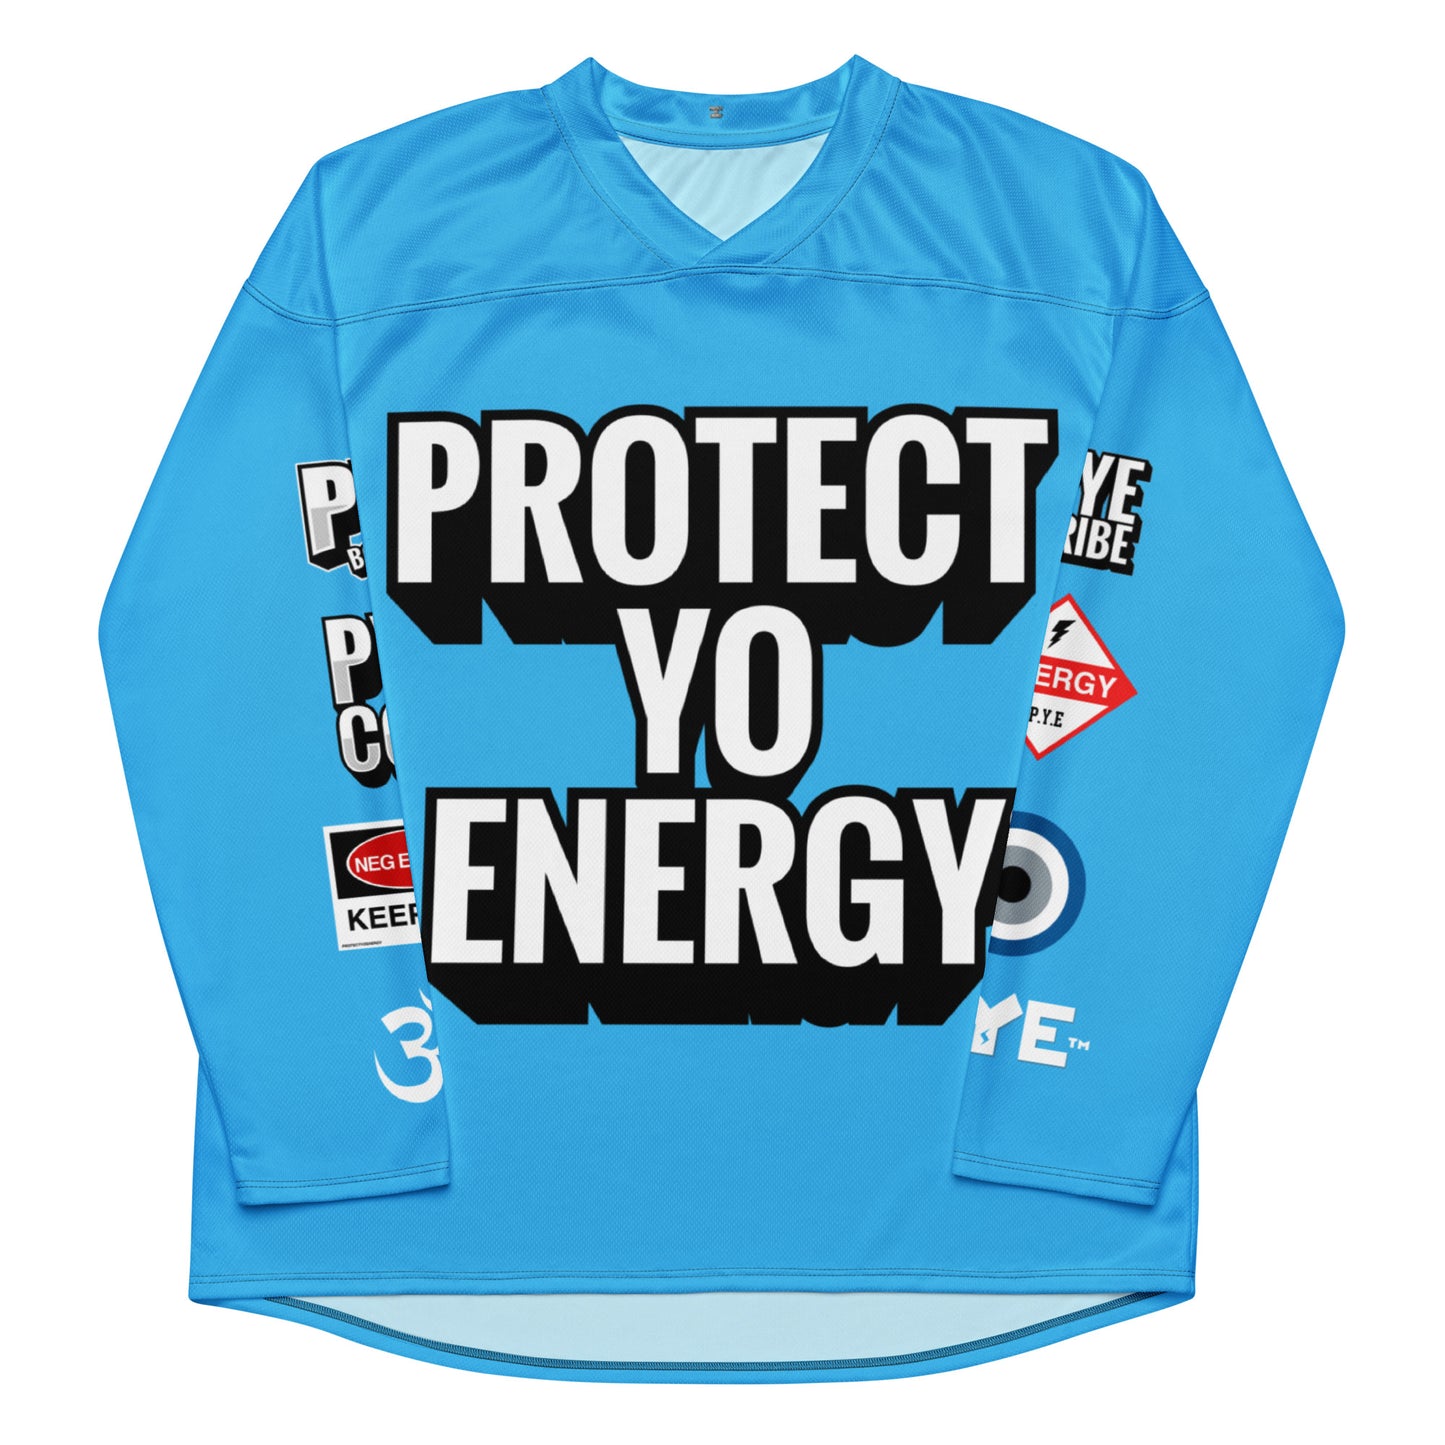 PYE Recycled hockey jersey Blu - PROTECT YO ENERGY 